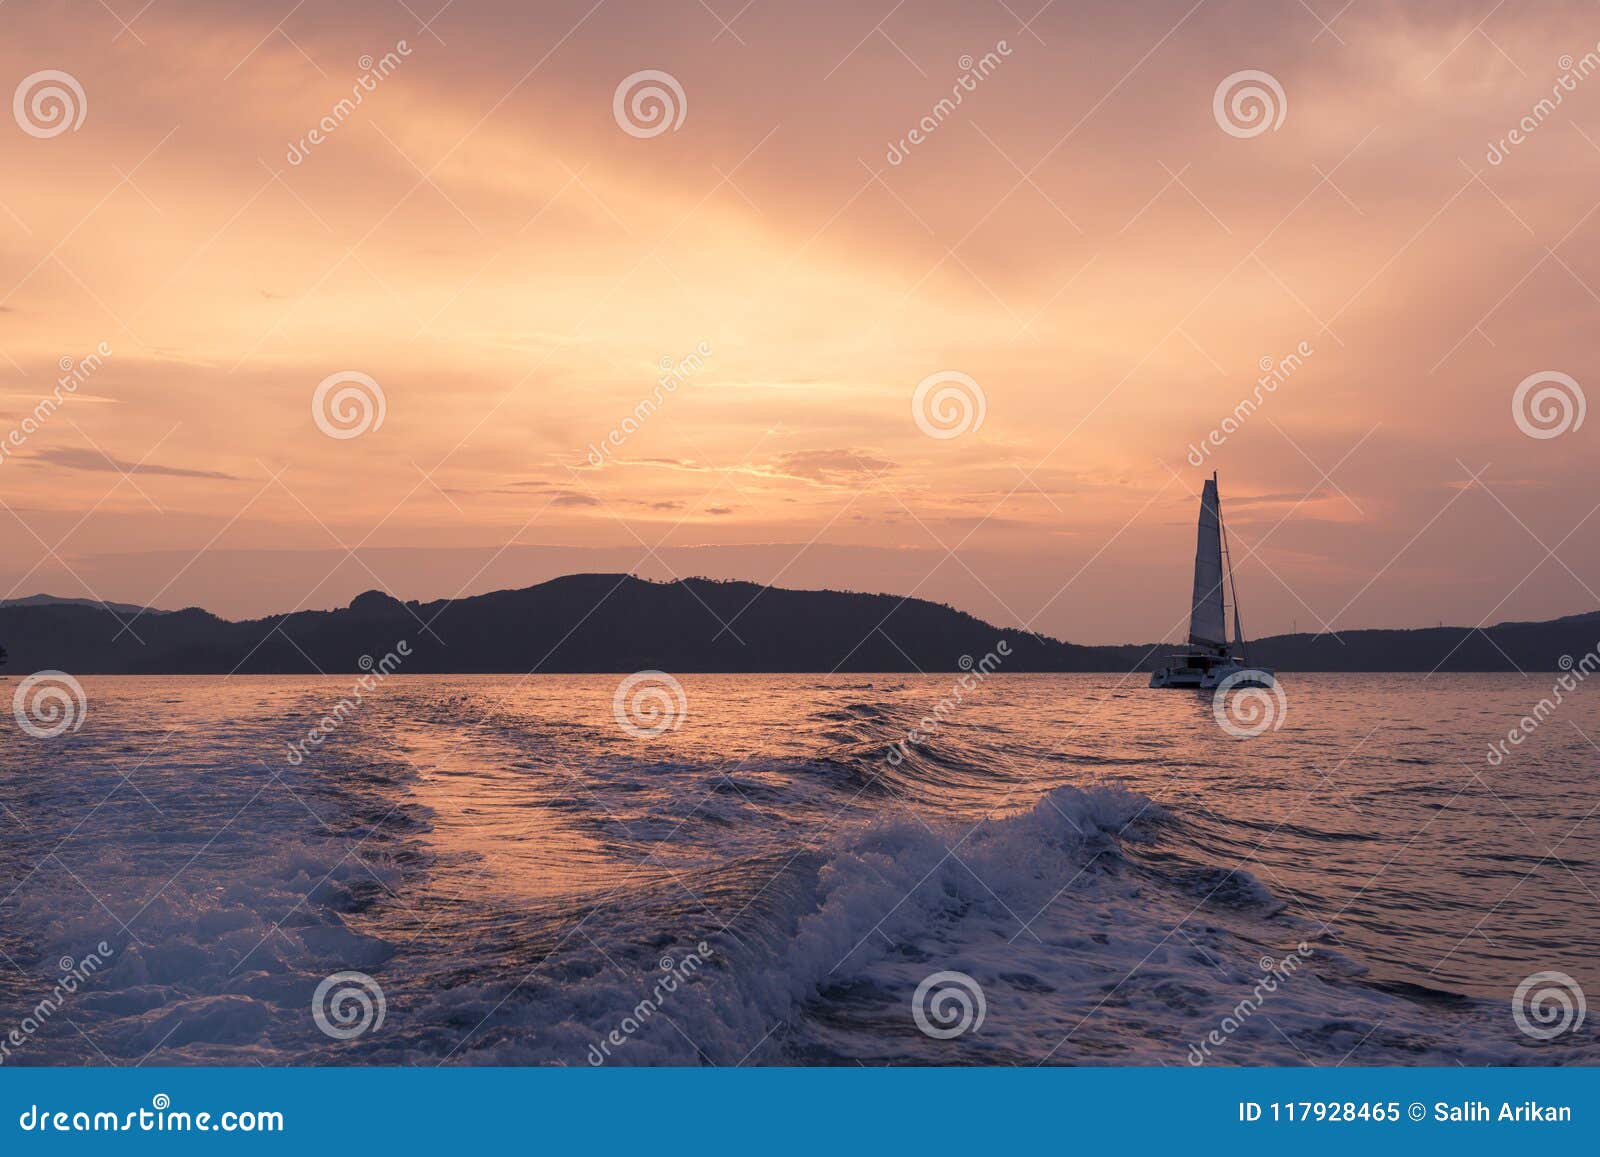 catamaran sailing on the ocean